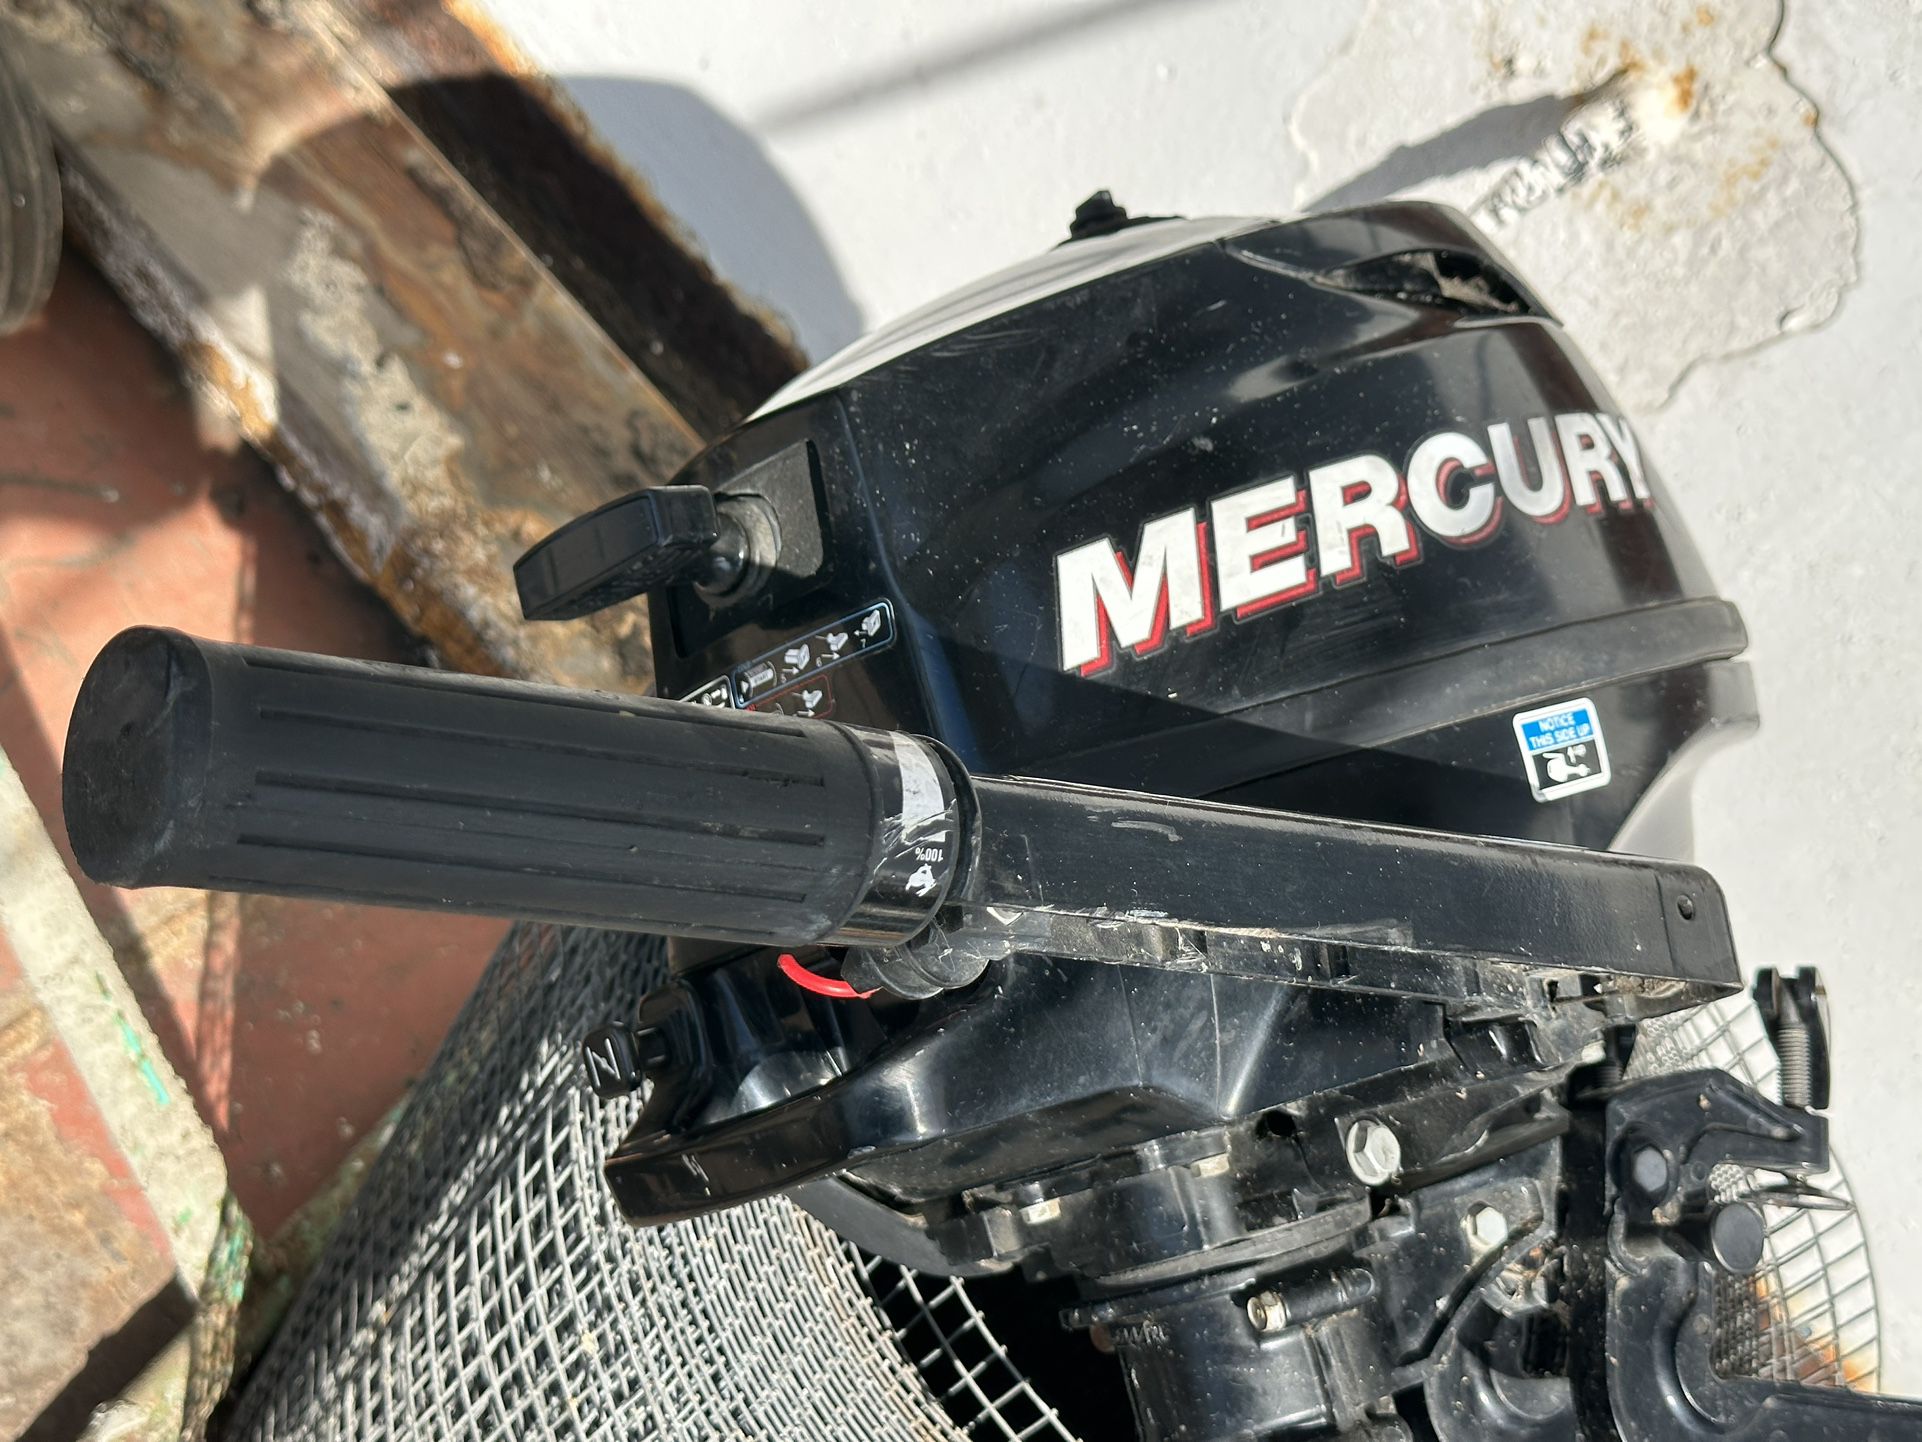 2012 Mercury 3.5 Horse Power 4 Stroke